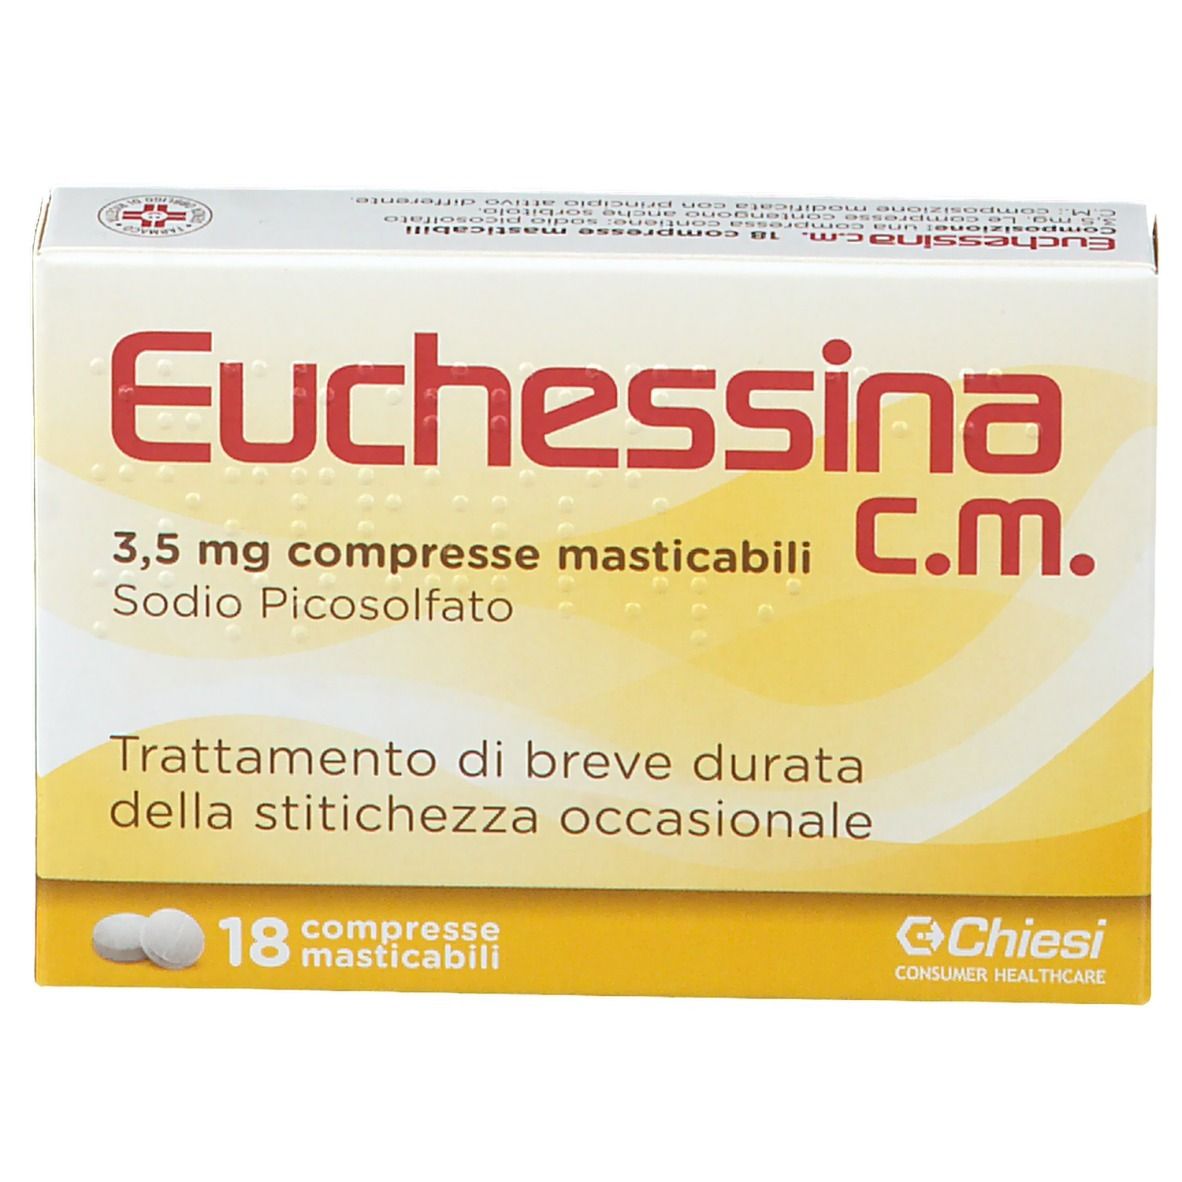 Euchessina C.M. Compresse masticabili